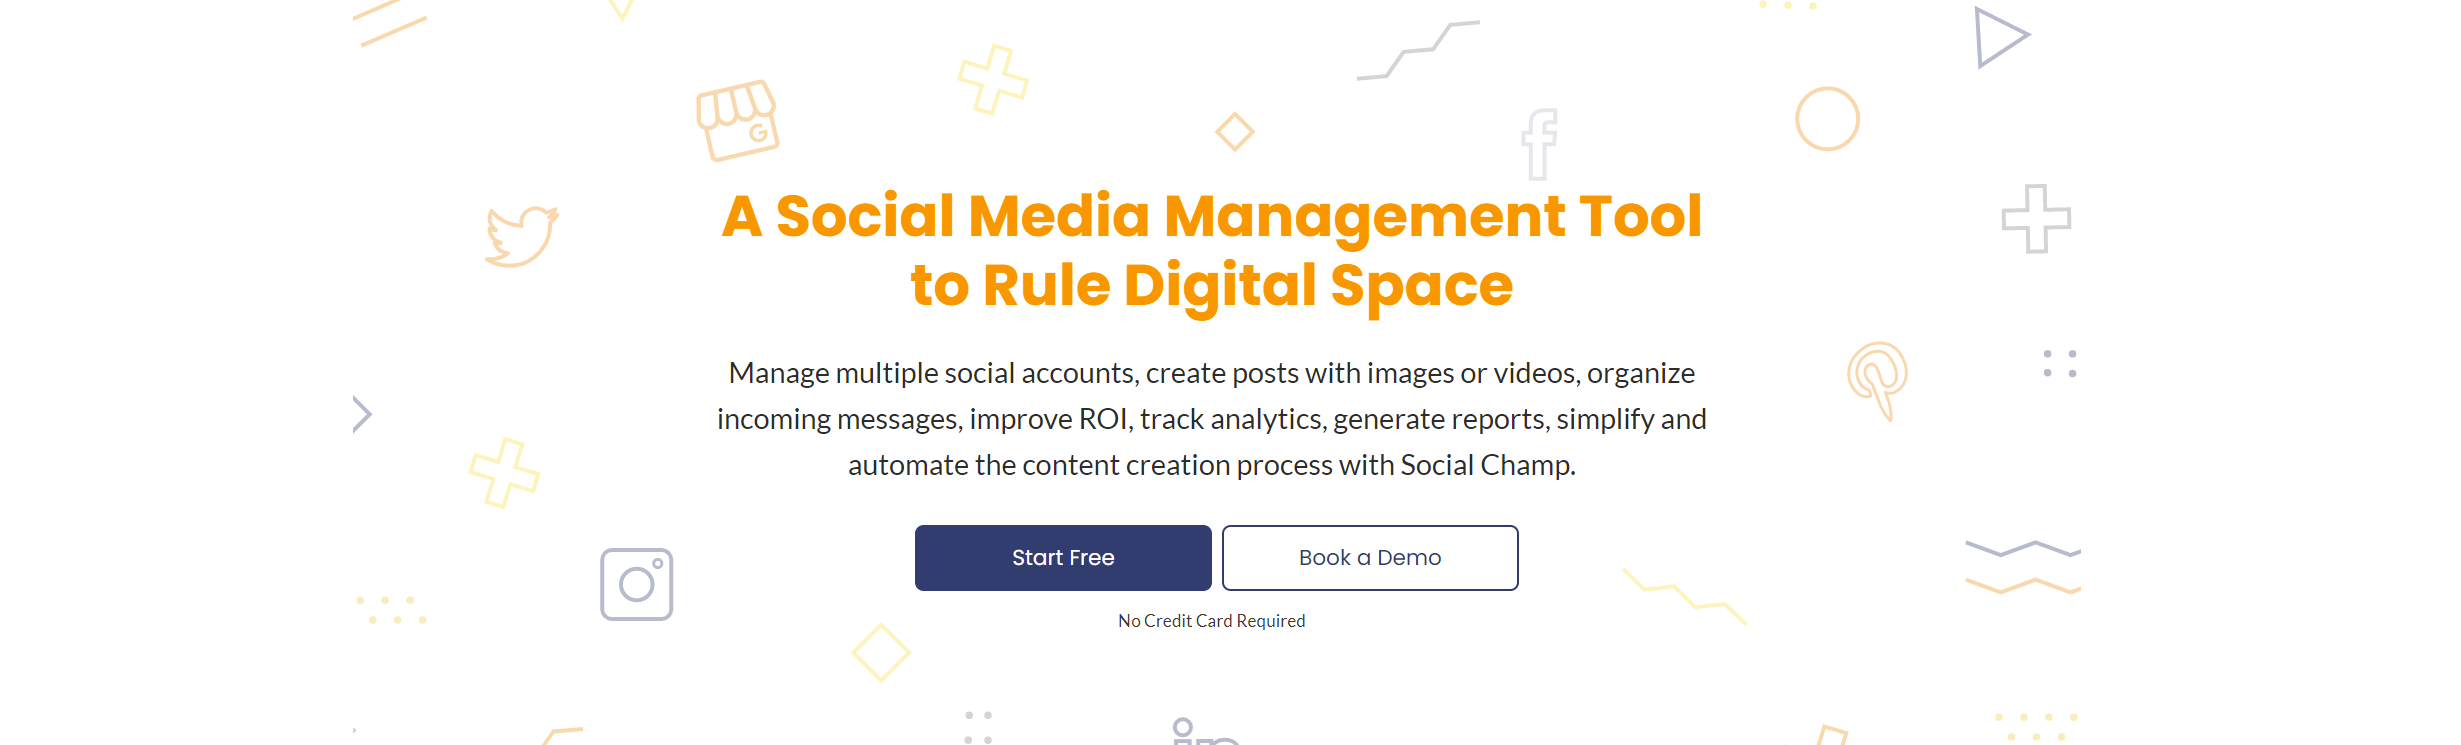 social media management tool, social champ